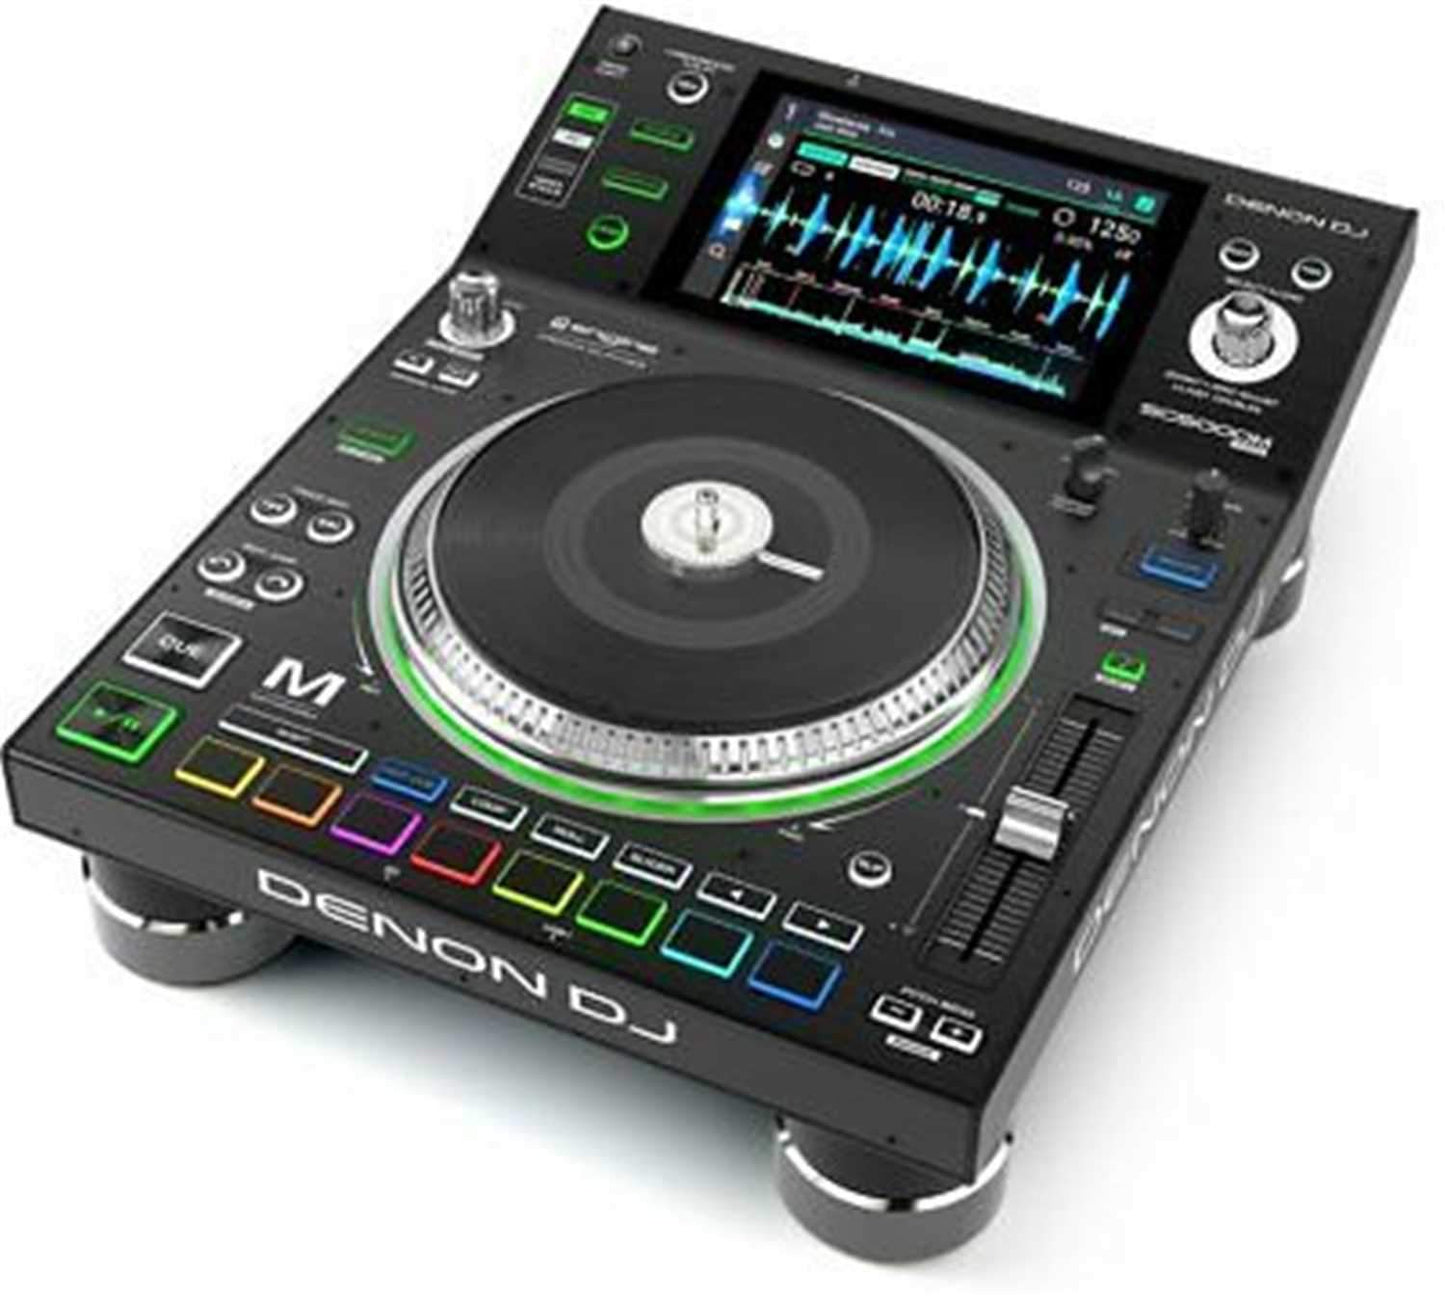 Denon DJ SC5000M Prime Tabletop DJ Media Player with Motorized Platter - PSSL ProSound and Stage Lighting